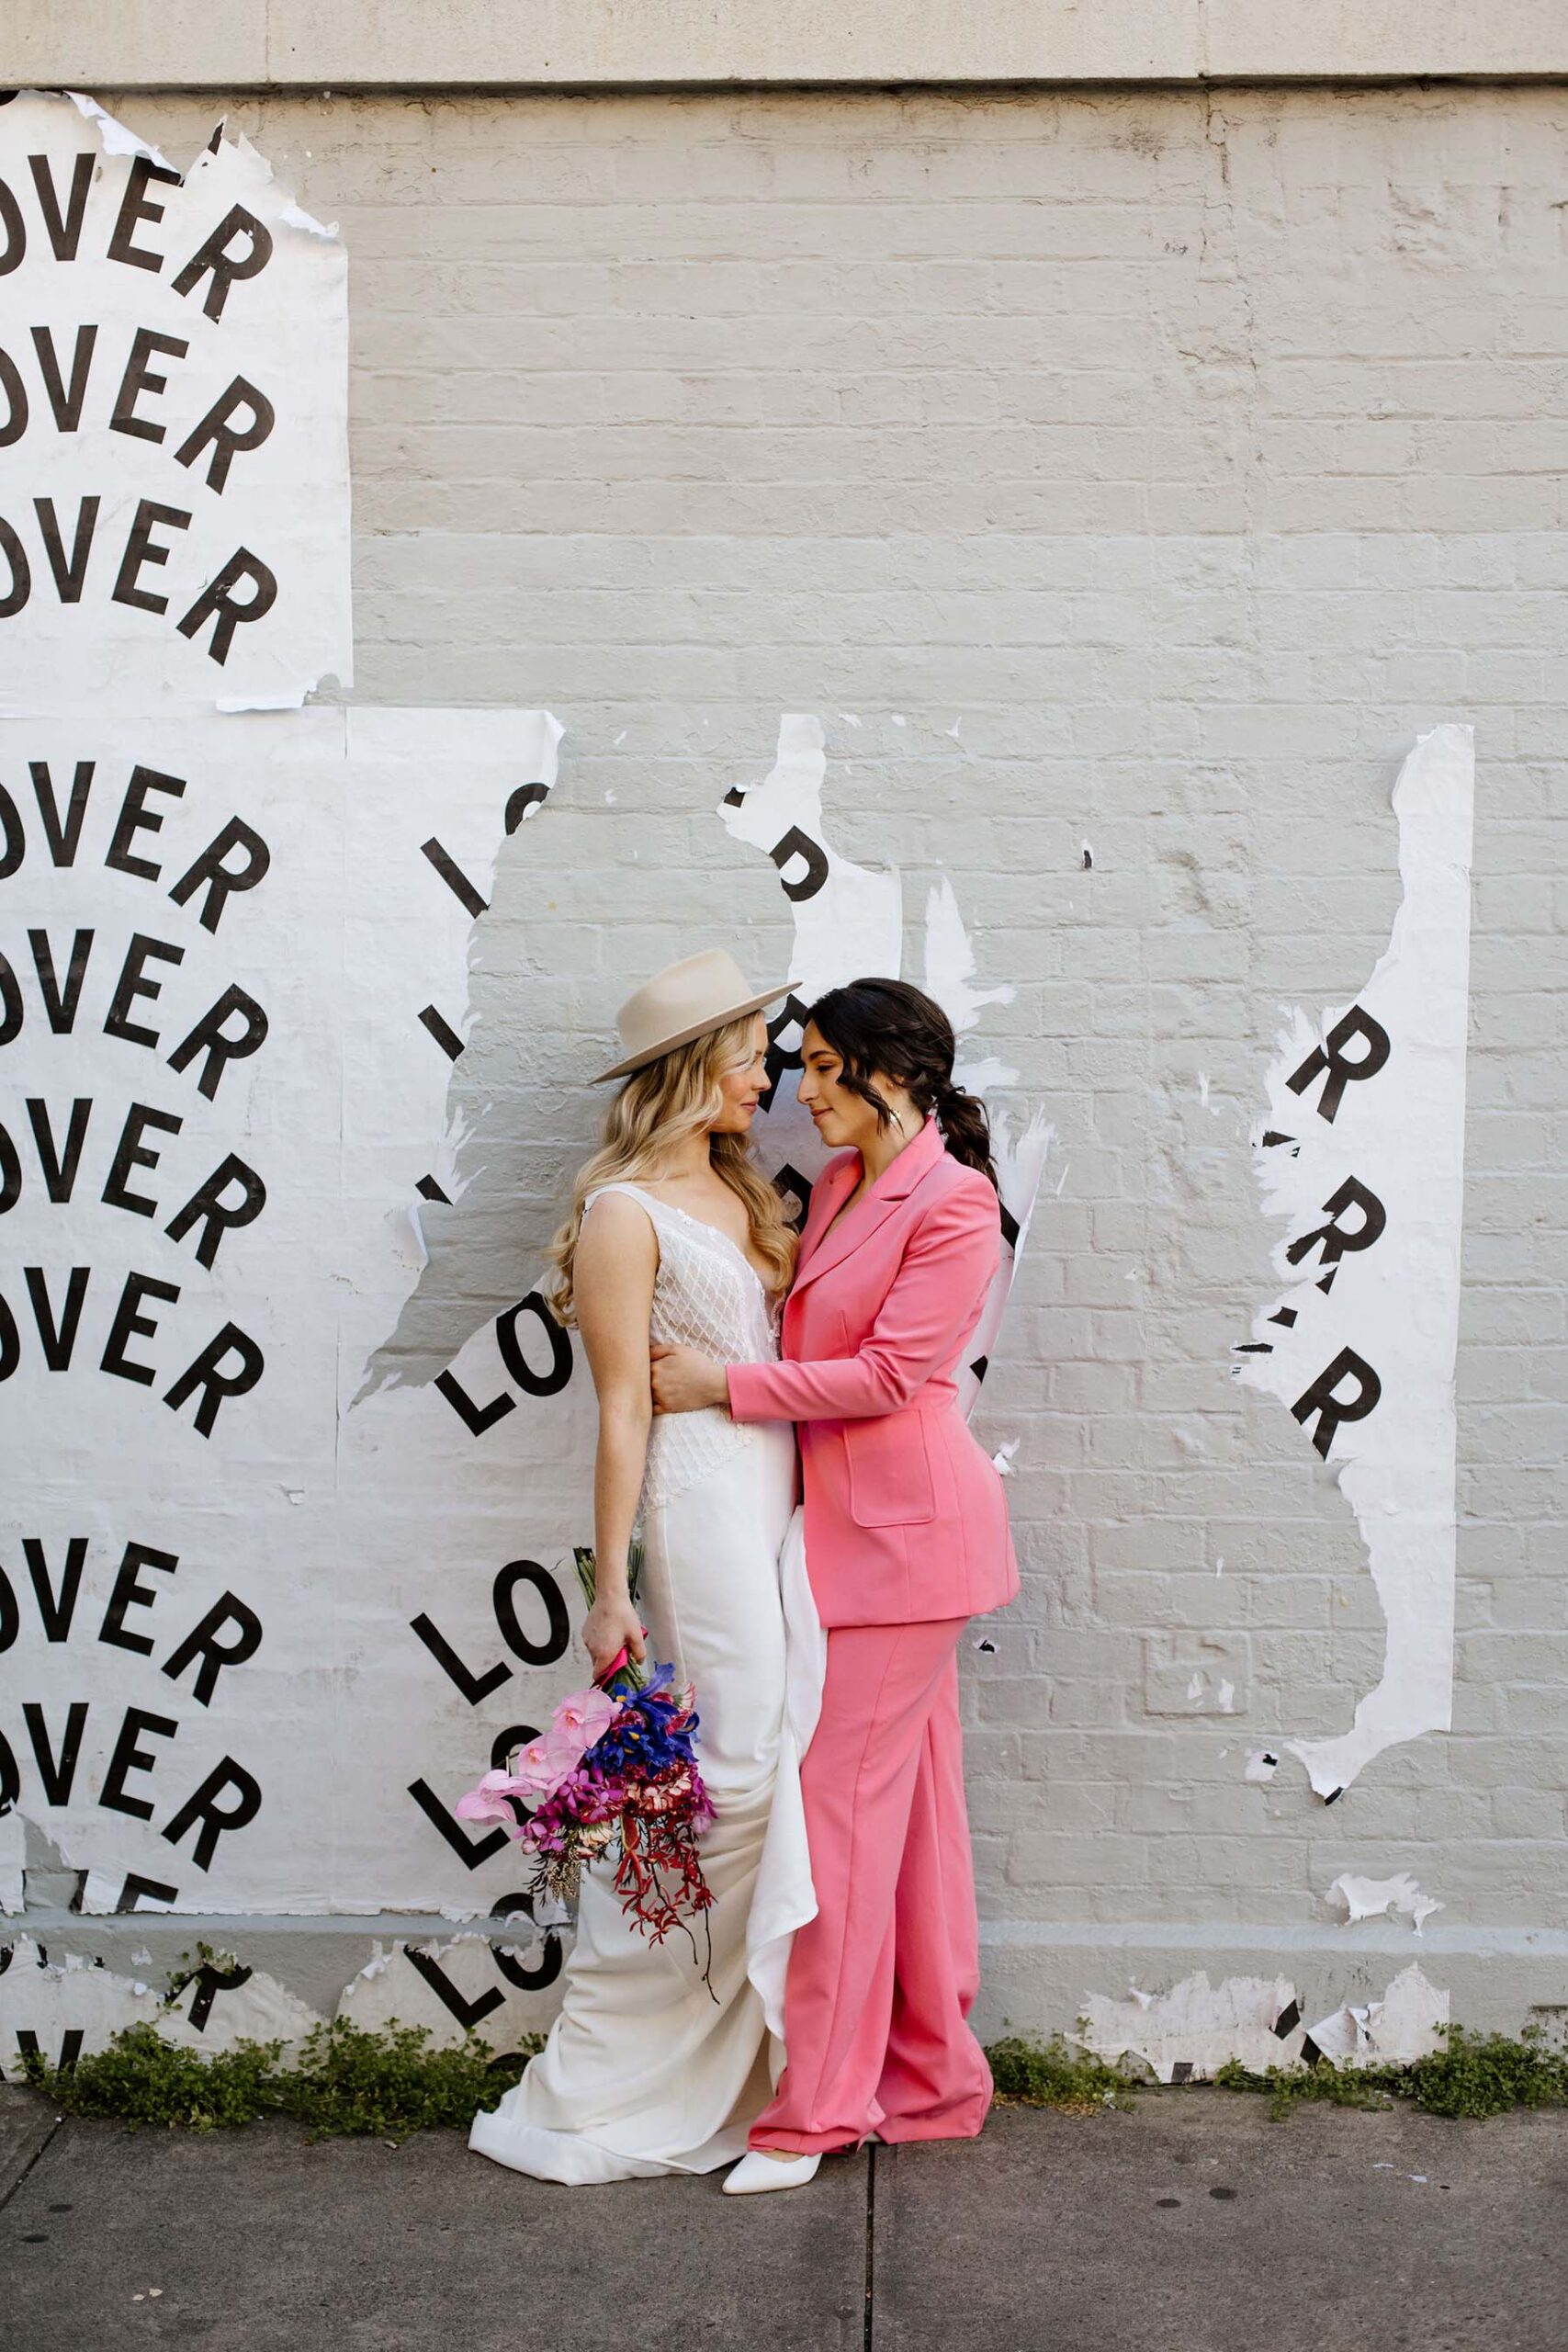 Melbourne Street Art Wedding Photos